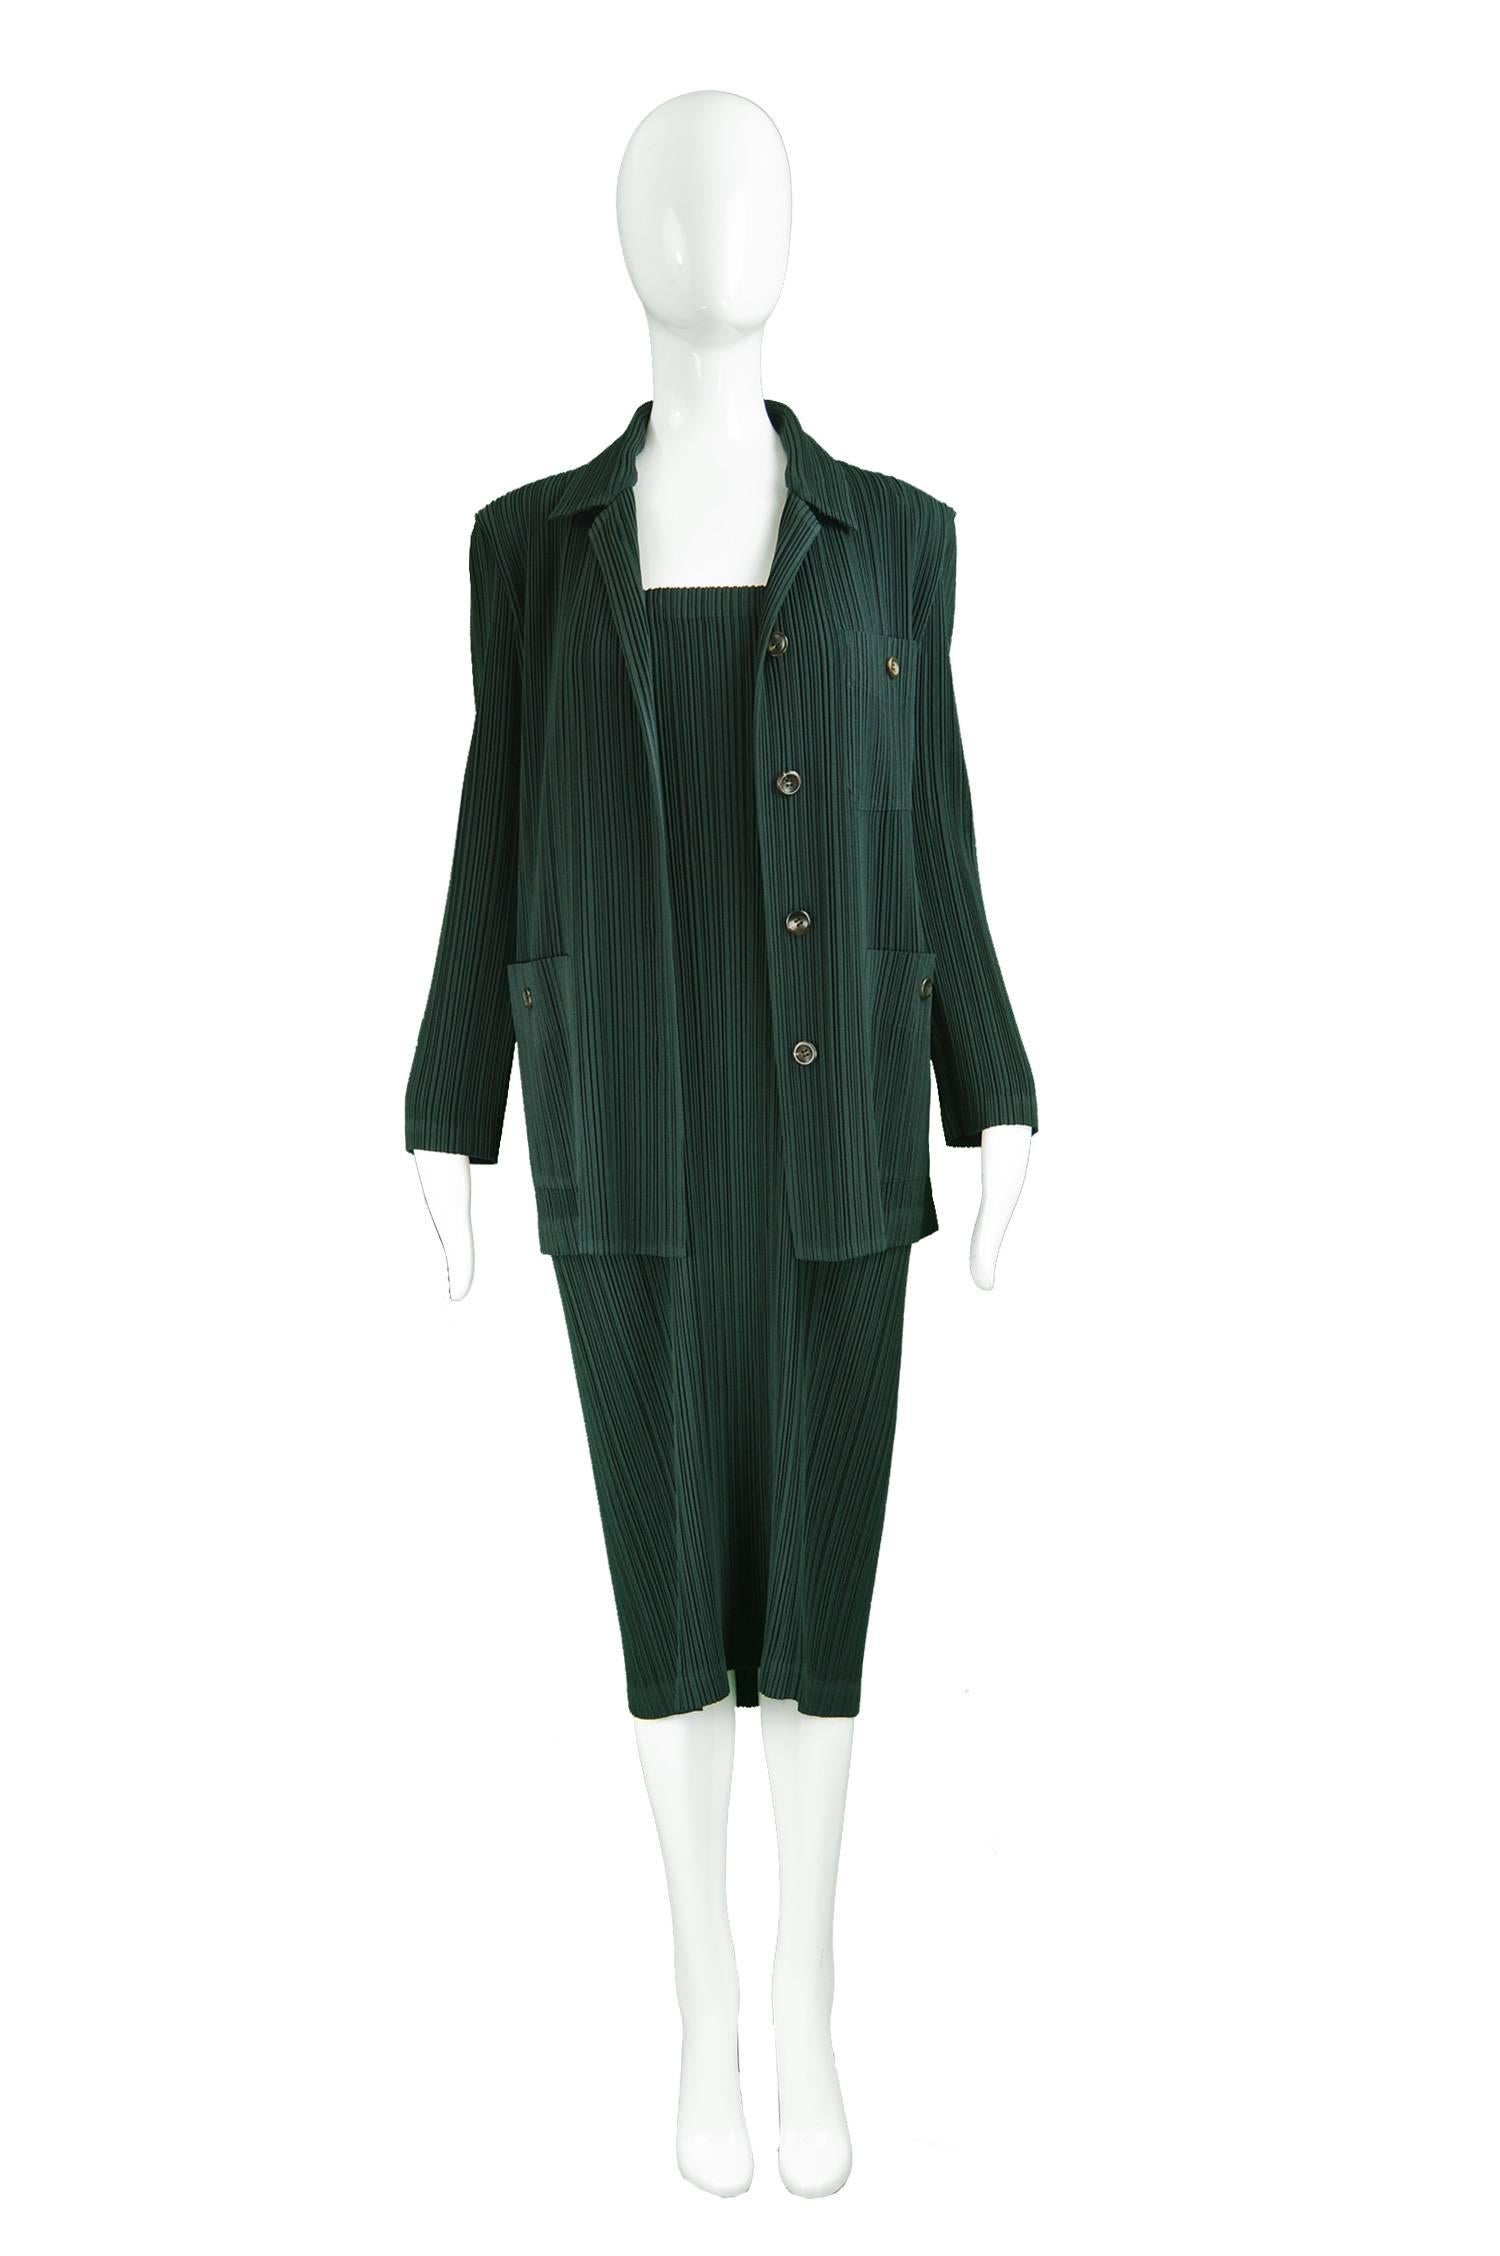 Issey Miyake Vintage Two Piece Pleated Jacket & Dress / Skirt Set, 1990s

Size: Marked a women’s Medium.
Jacket
Bust - 38” / 96cm
Length (Shoulder to Hem) - 27” / 68cm
Shoulder to Shoulder - 17” / 43cm
Sleeve Pit to Cuff - 16” / 40cm
Sleeve